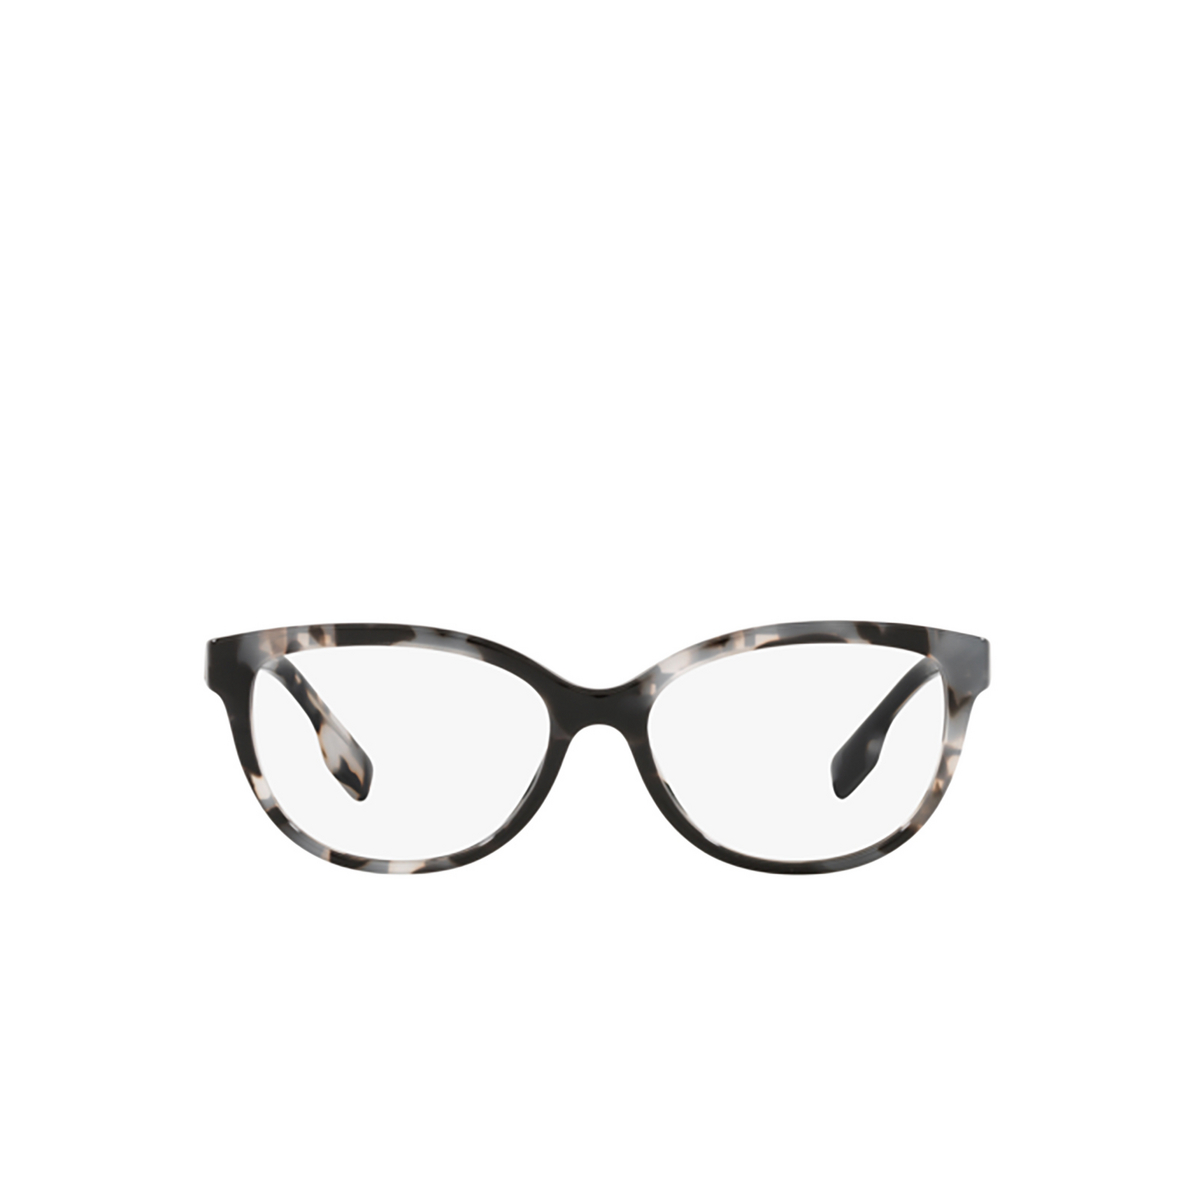 Burberry ESME Eyeglasses 3983 Top Check / Striped Havana - front view